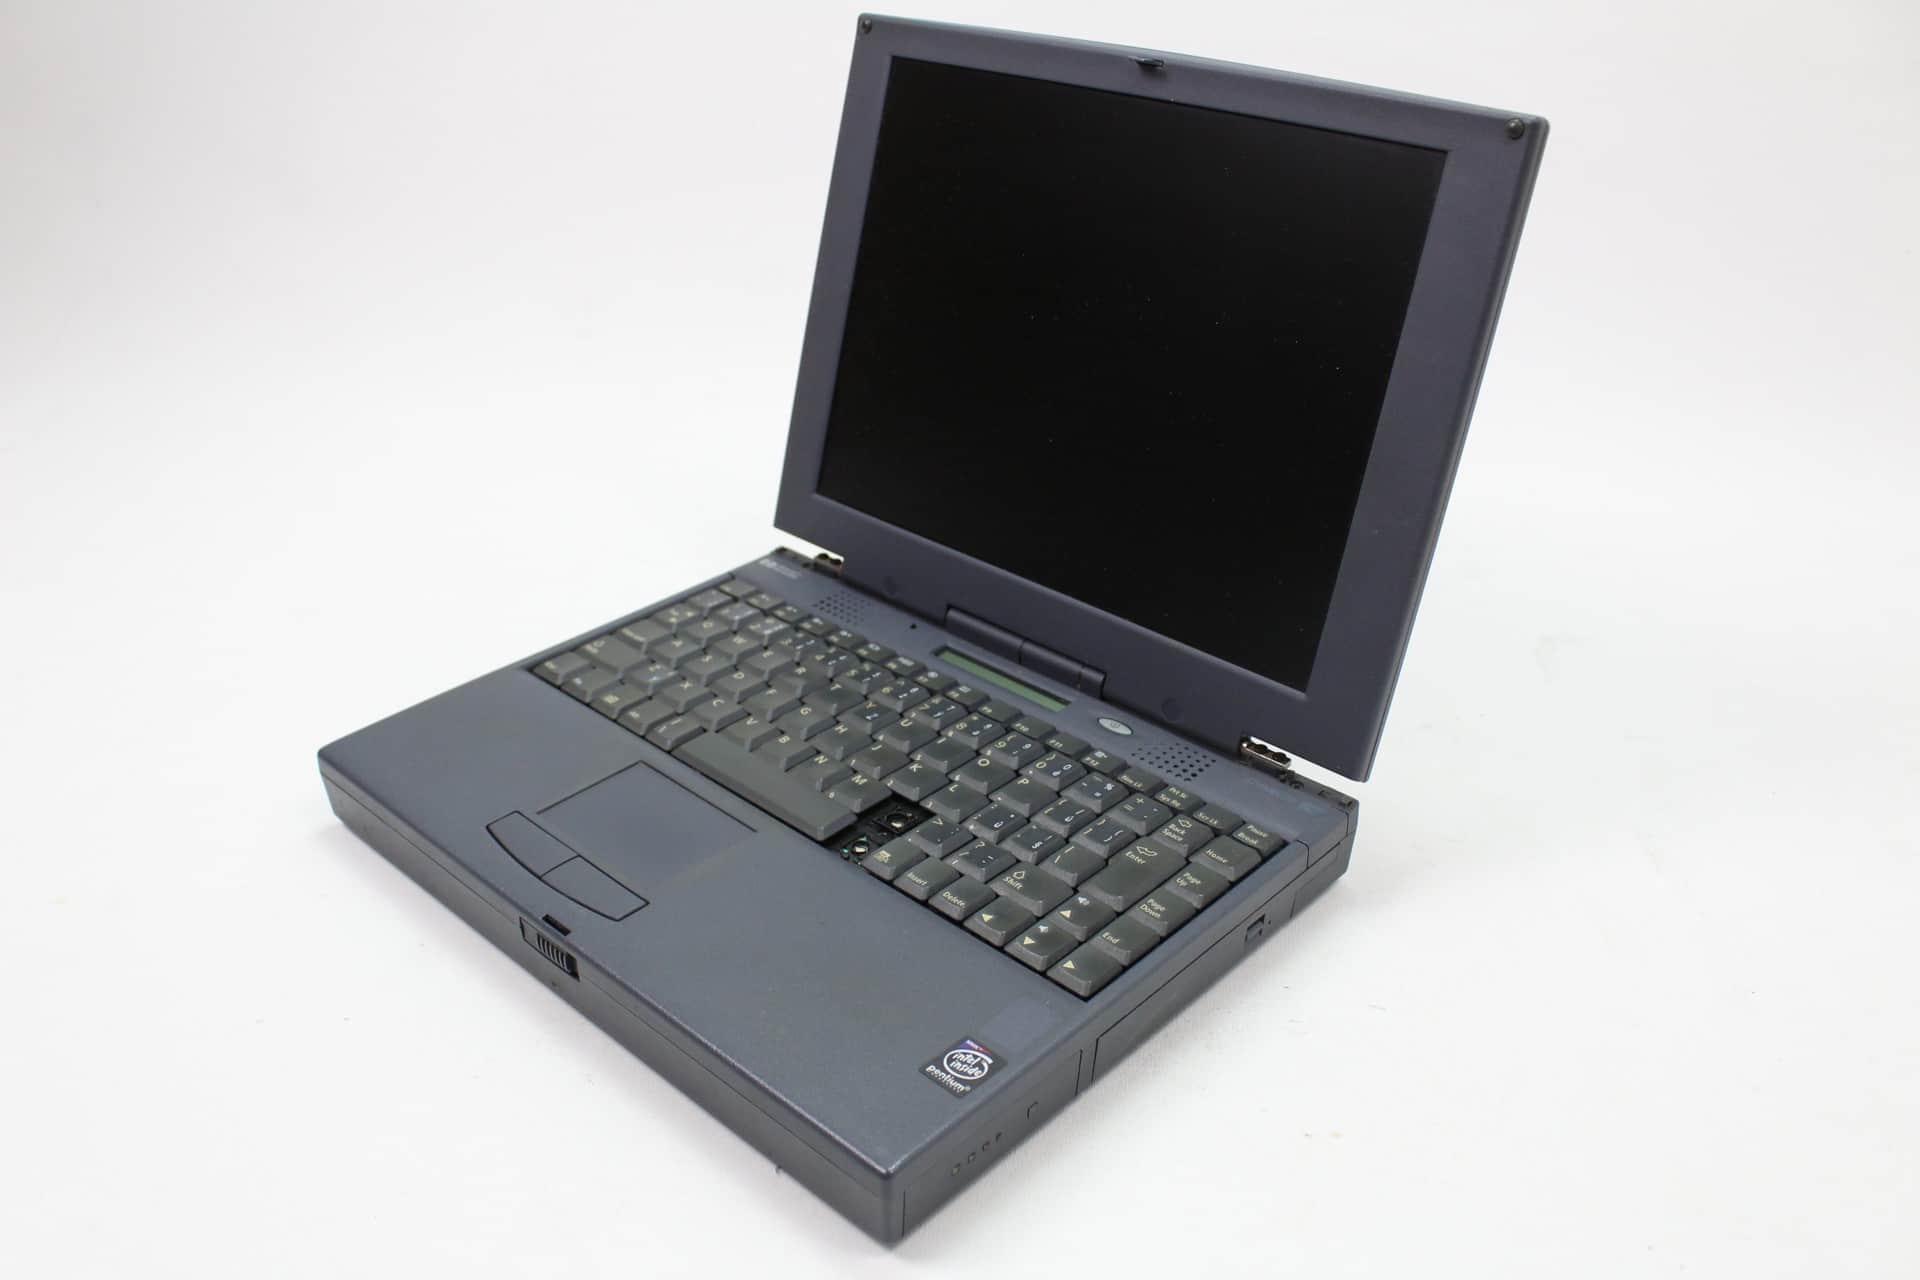 Hewlett Packard OmniBook 2100 - Otevřený zprava